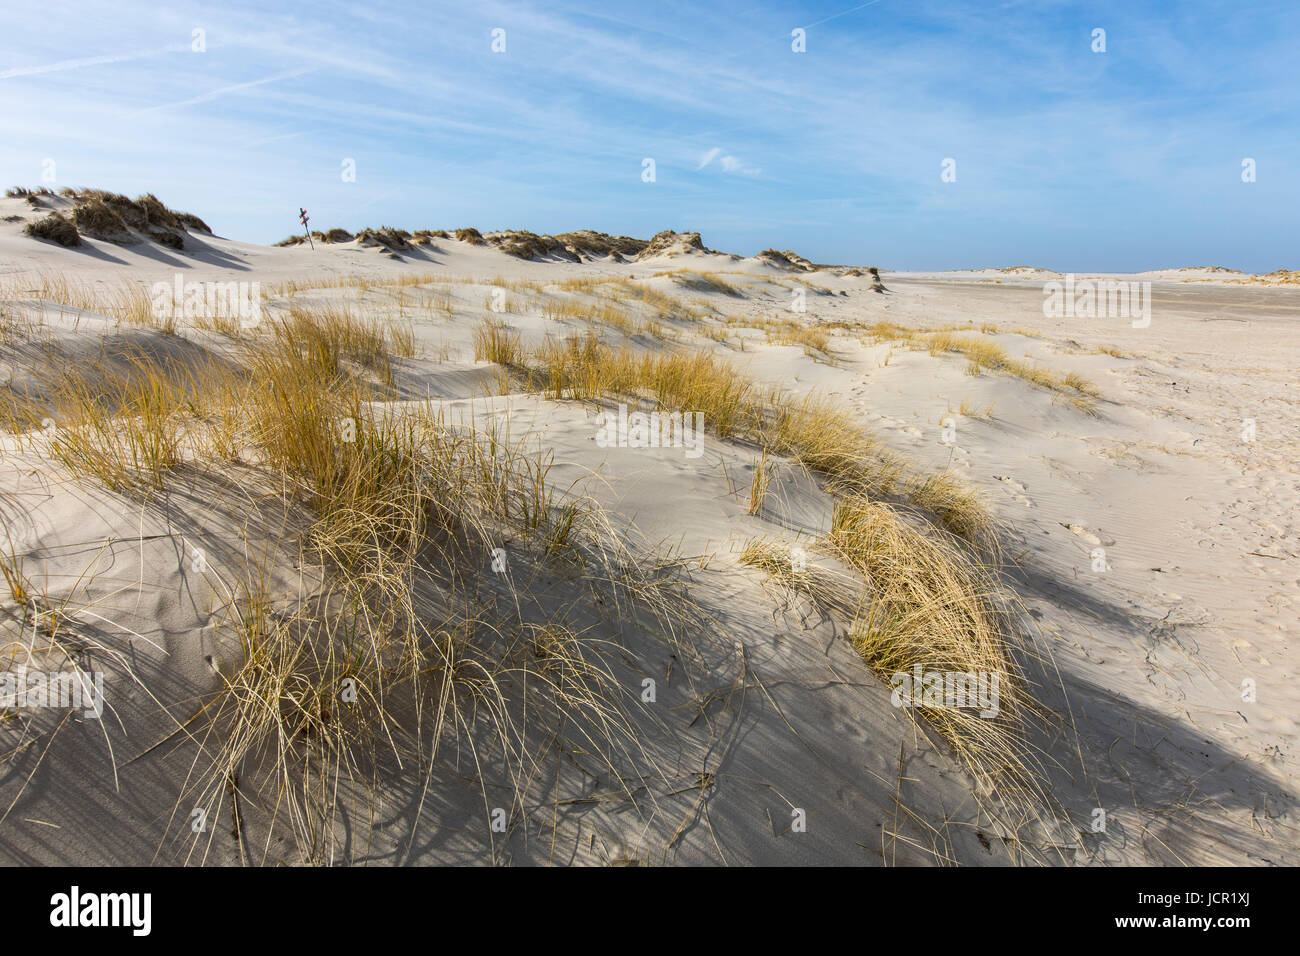 North Sea island, Norderney, East Frisia, Germany, Beach, Stock Photo